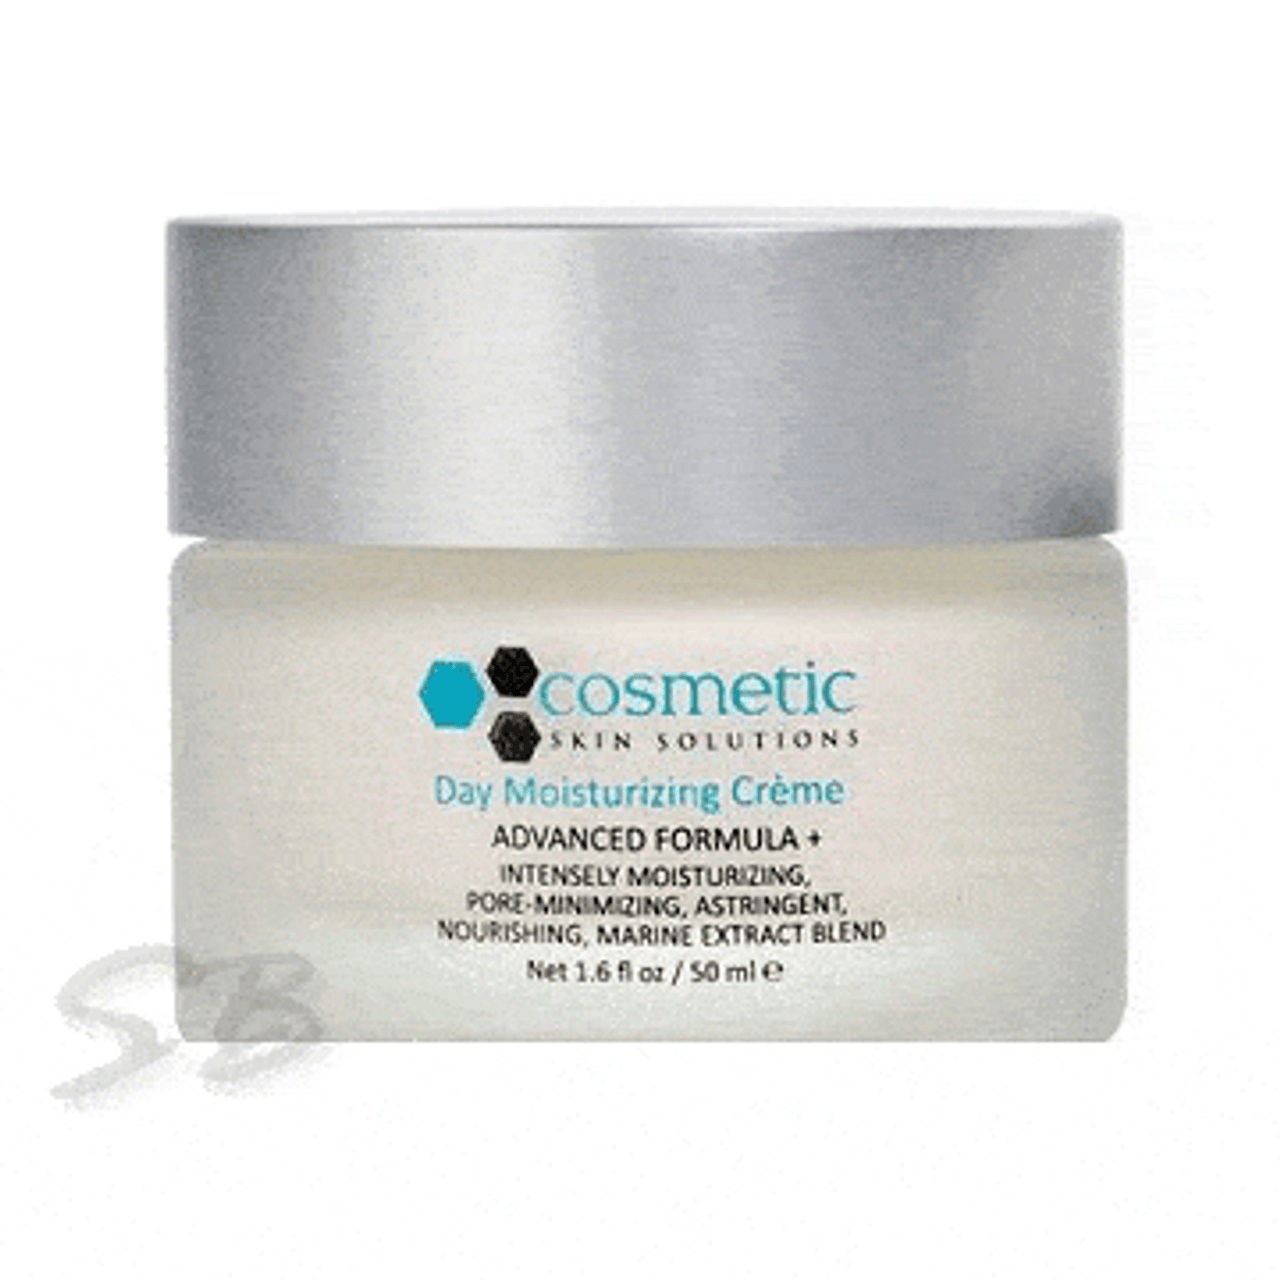 Cosmetic Skin Solutions Day Moisturizing Creme Advanced Formula + - 1.6 oz